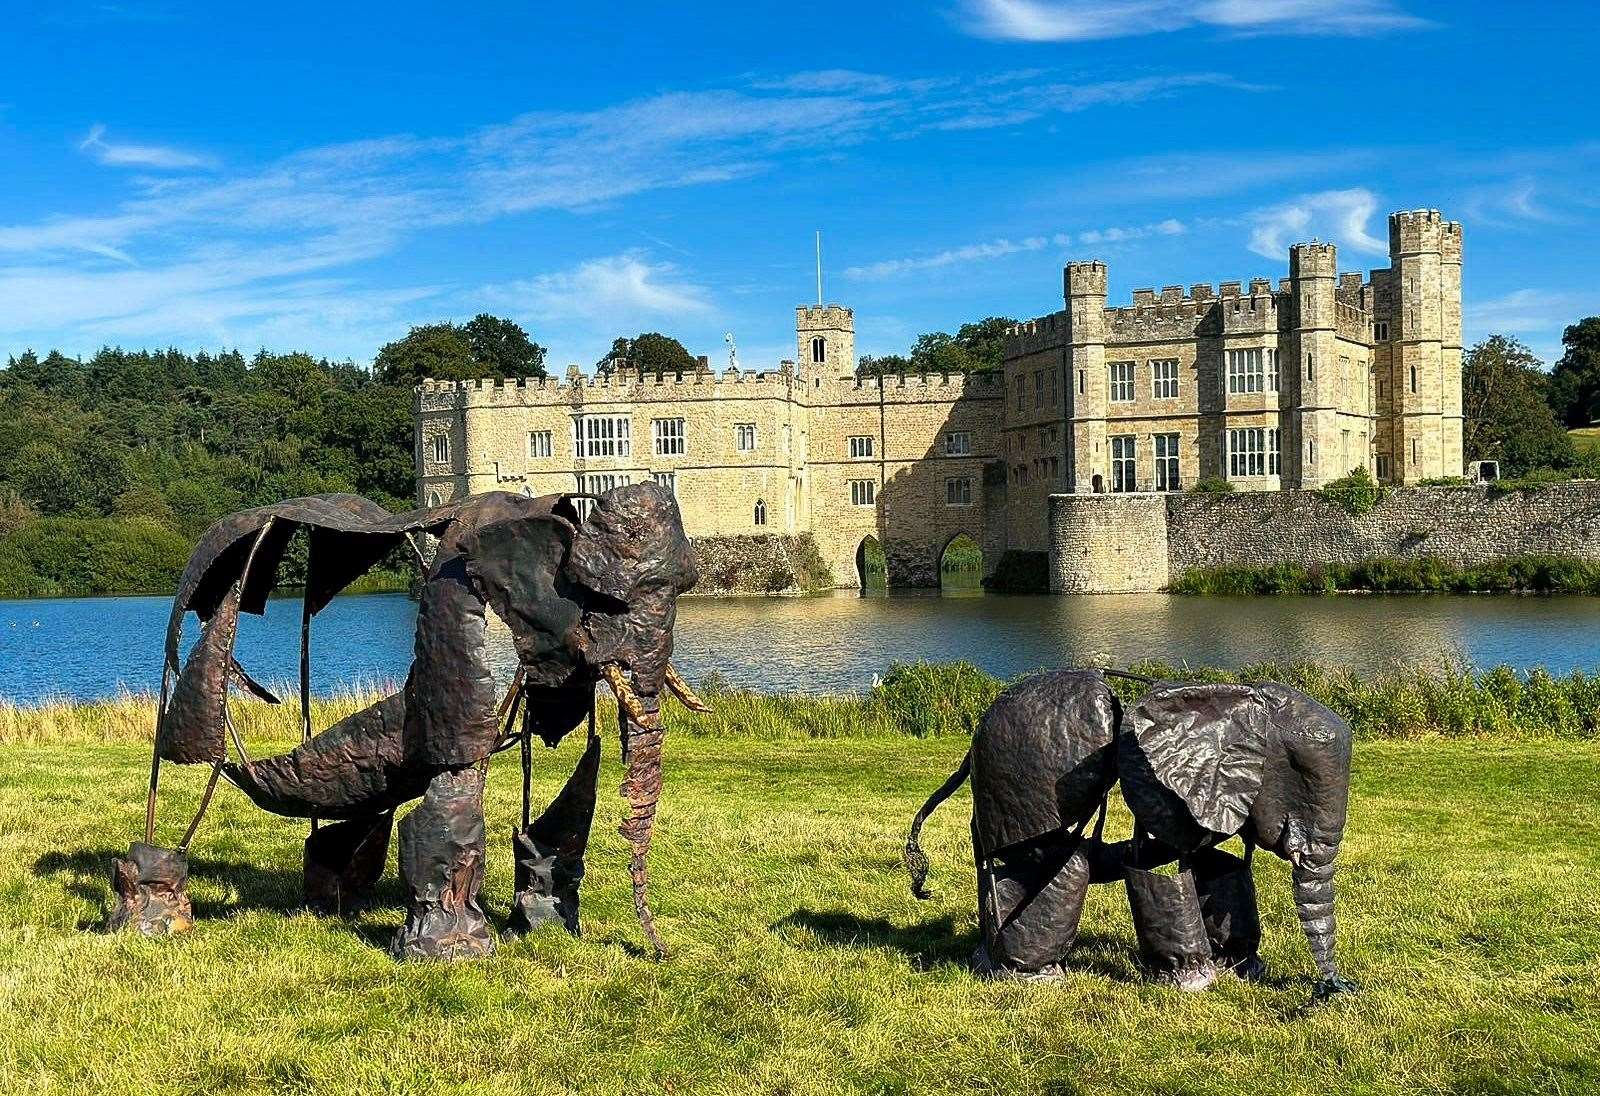 The Sublime Sculpture Trail Safari at Leeds Castle opens today. Picture: We Are Destination